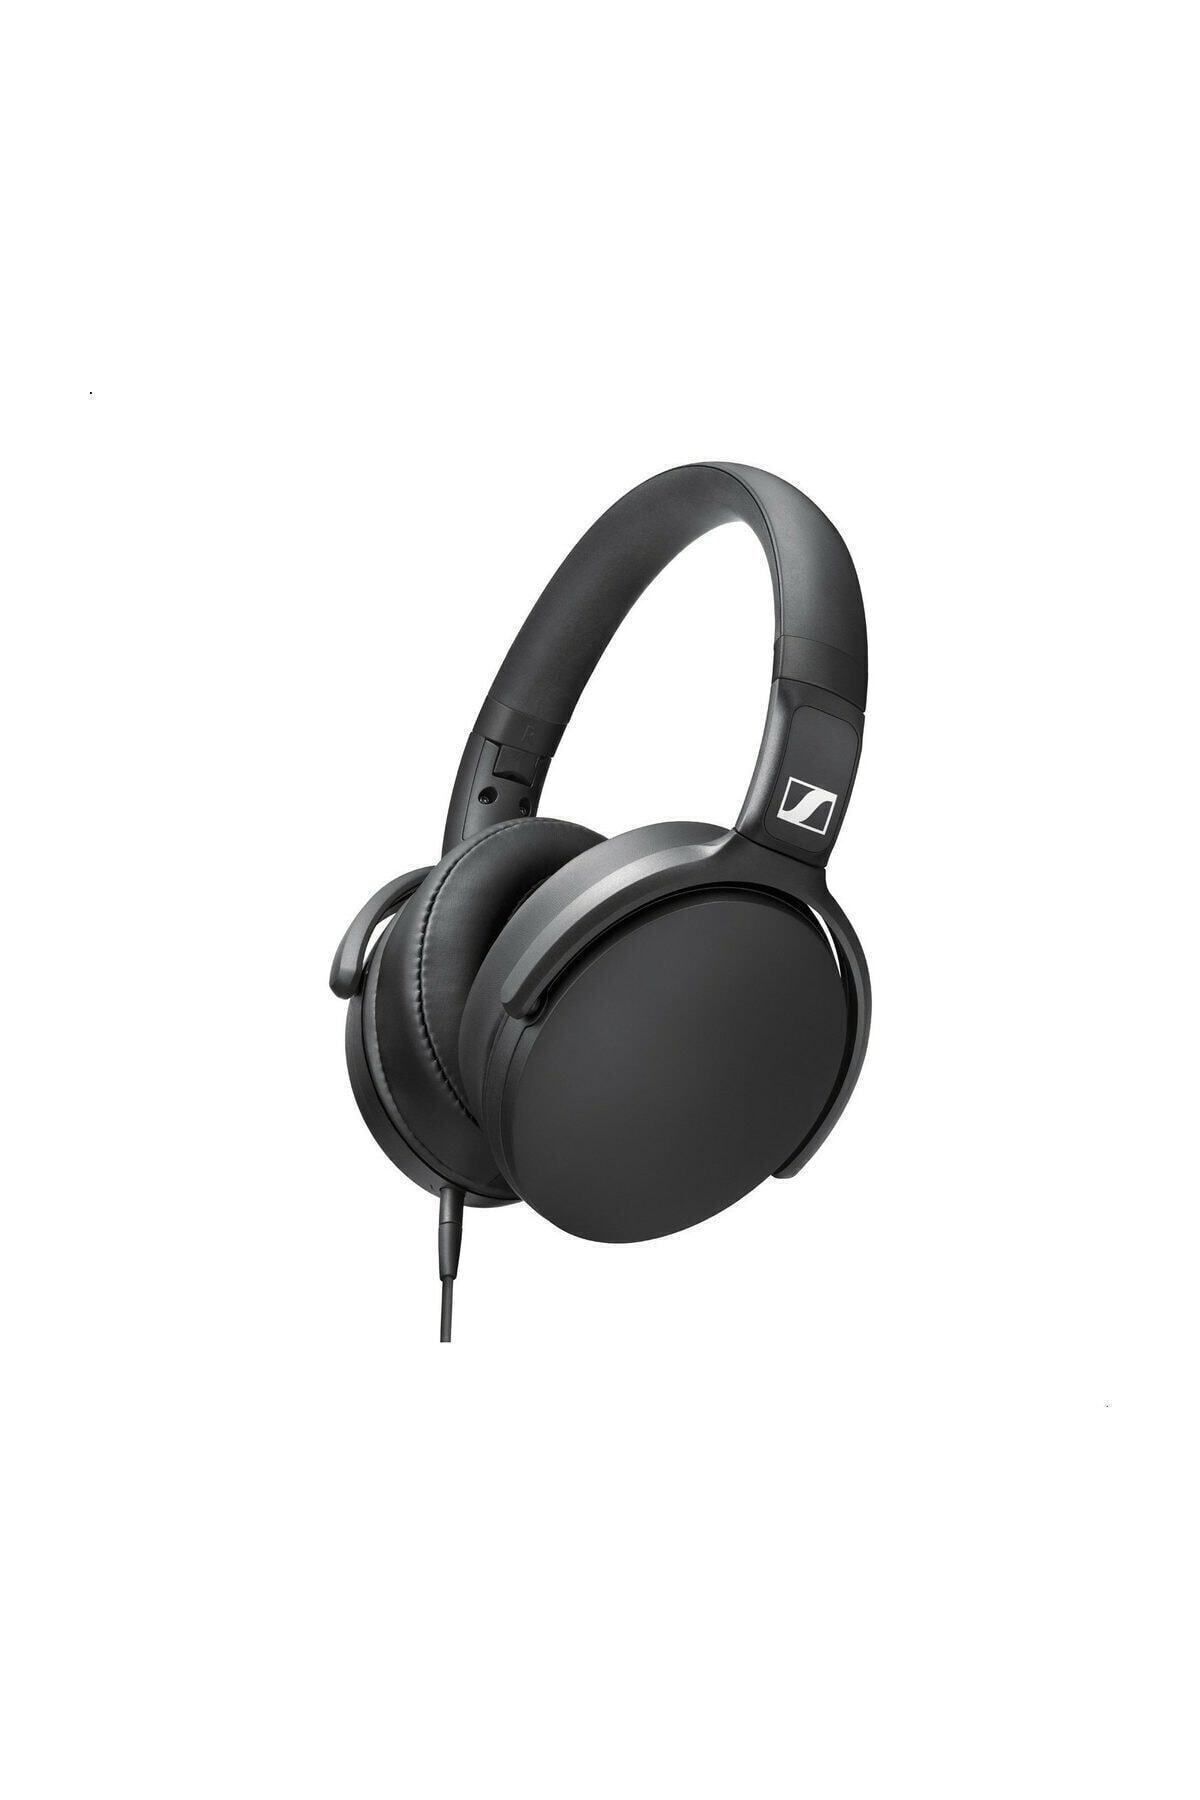 Sennheiser HD 400S Mikrofonlu Siyah Kulak Üstü Kablolu Kulaklık (Sennheiser Türkiye Garantili)